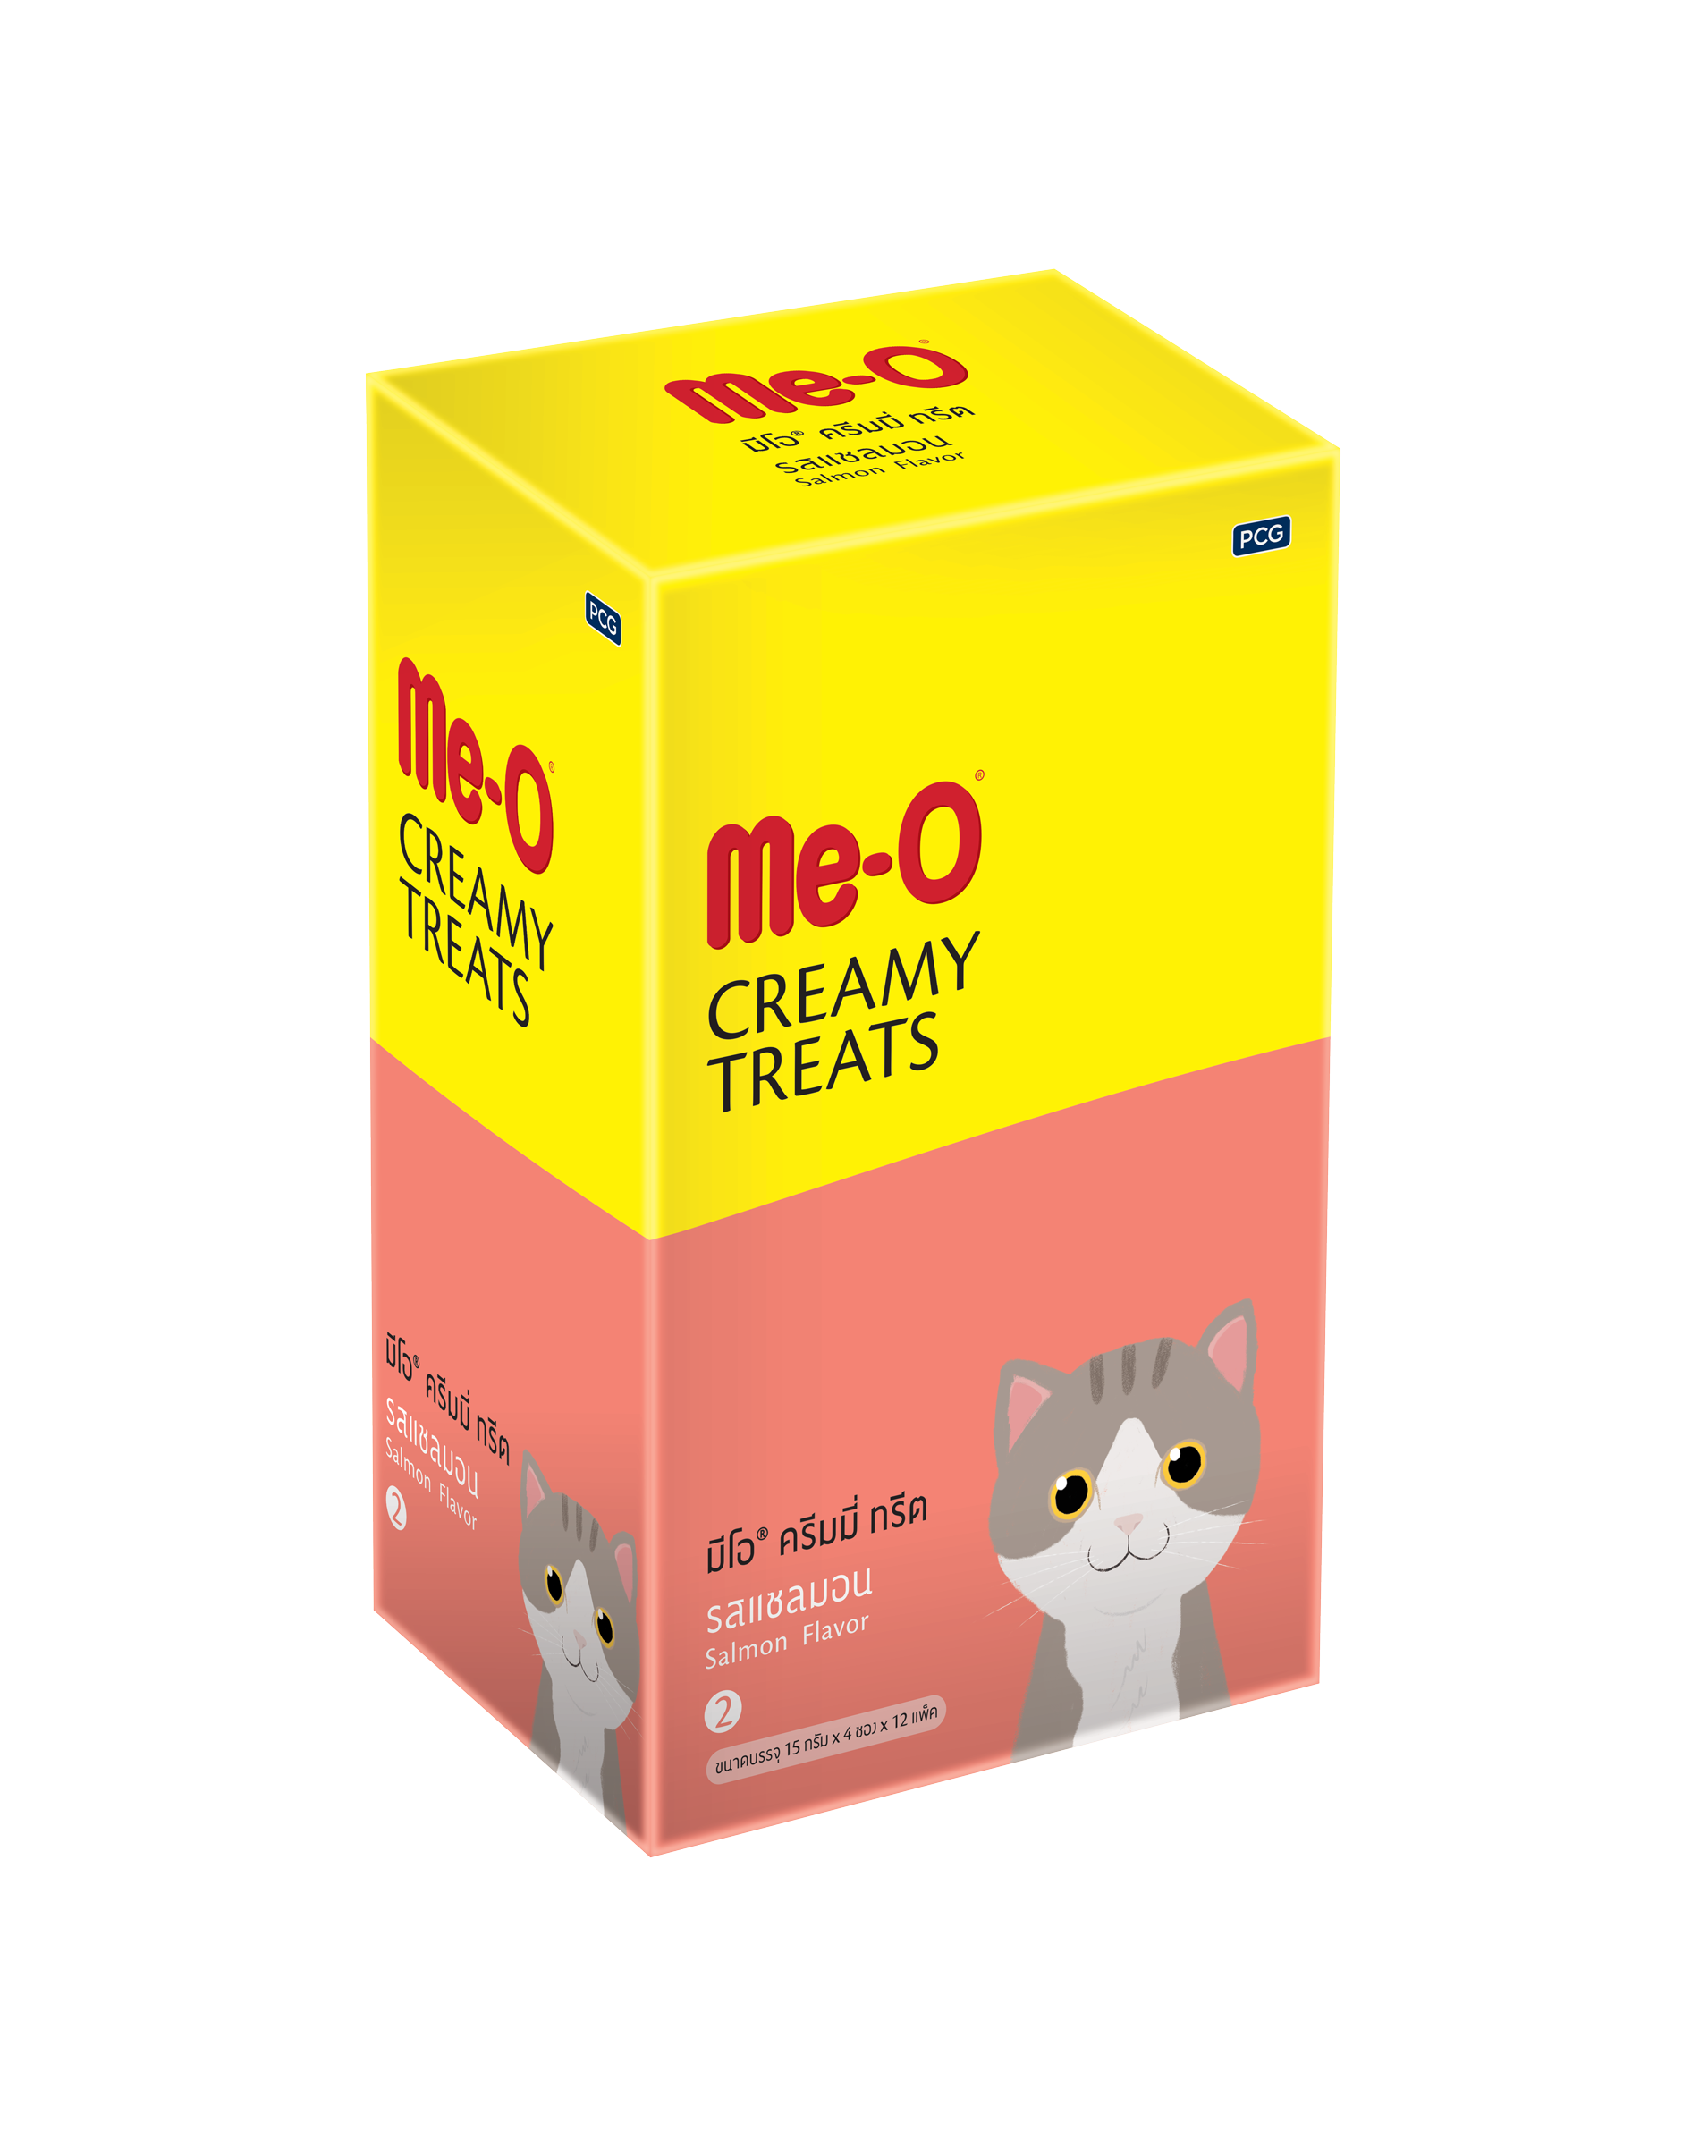 MeO Cat Lick (Creamy Treats) – Salmon Flavour (15g x 4)